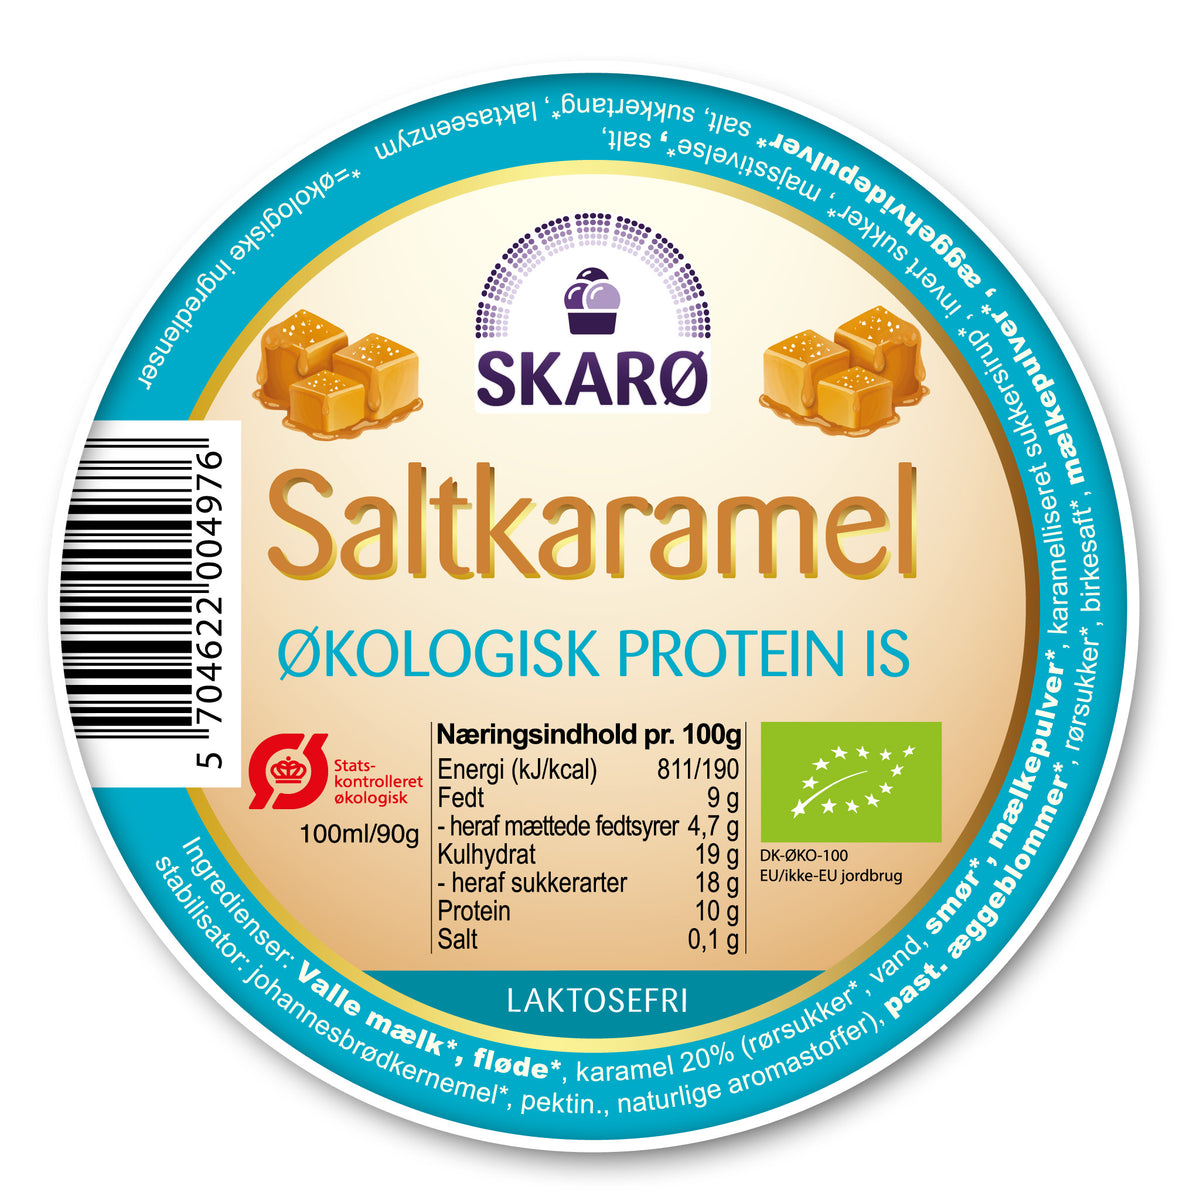 Økologisk Proteinis med Saltkaramel fra Skarø